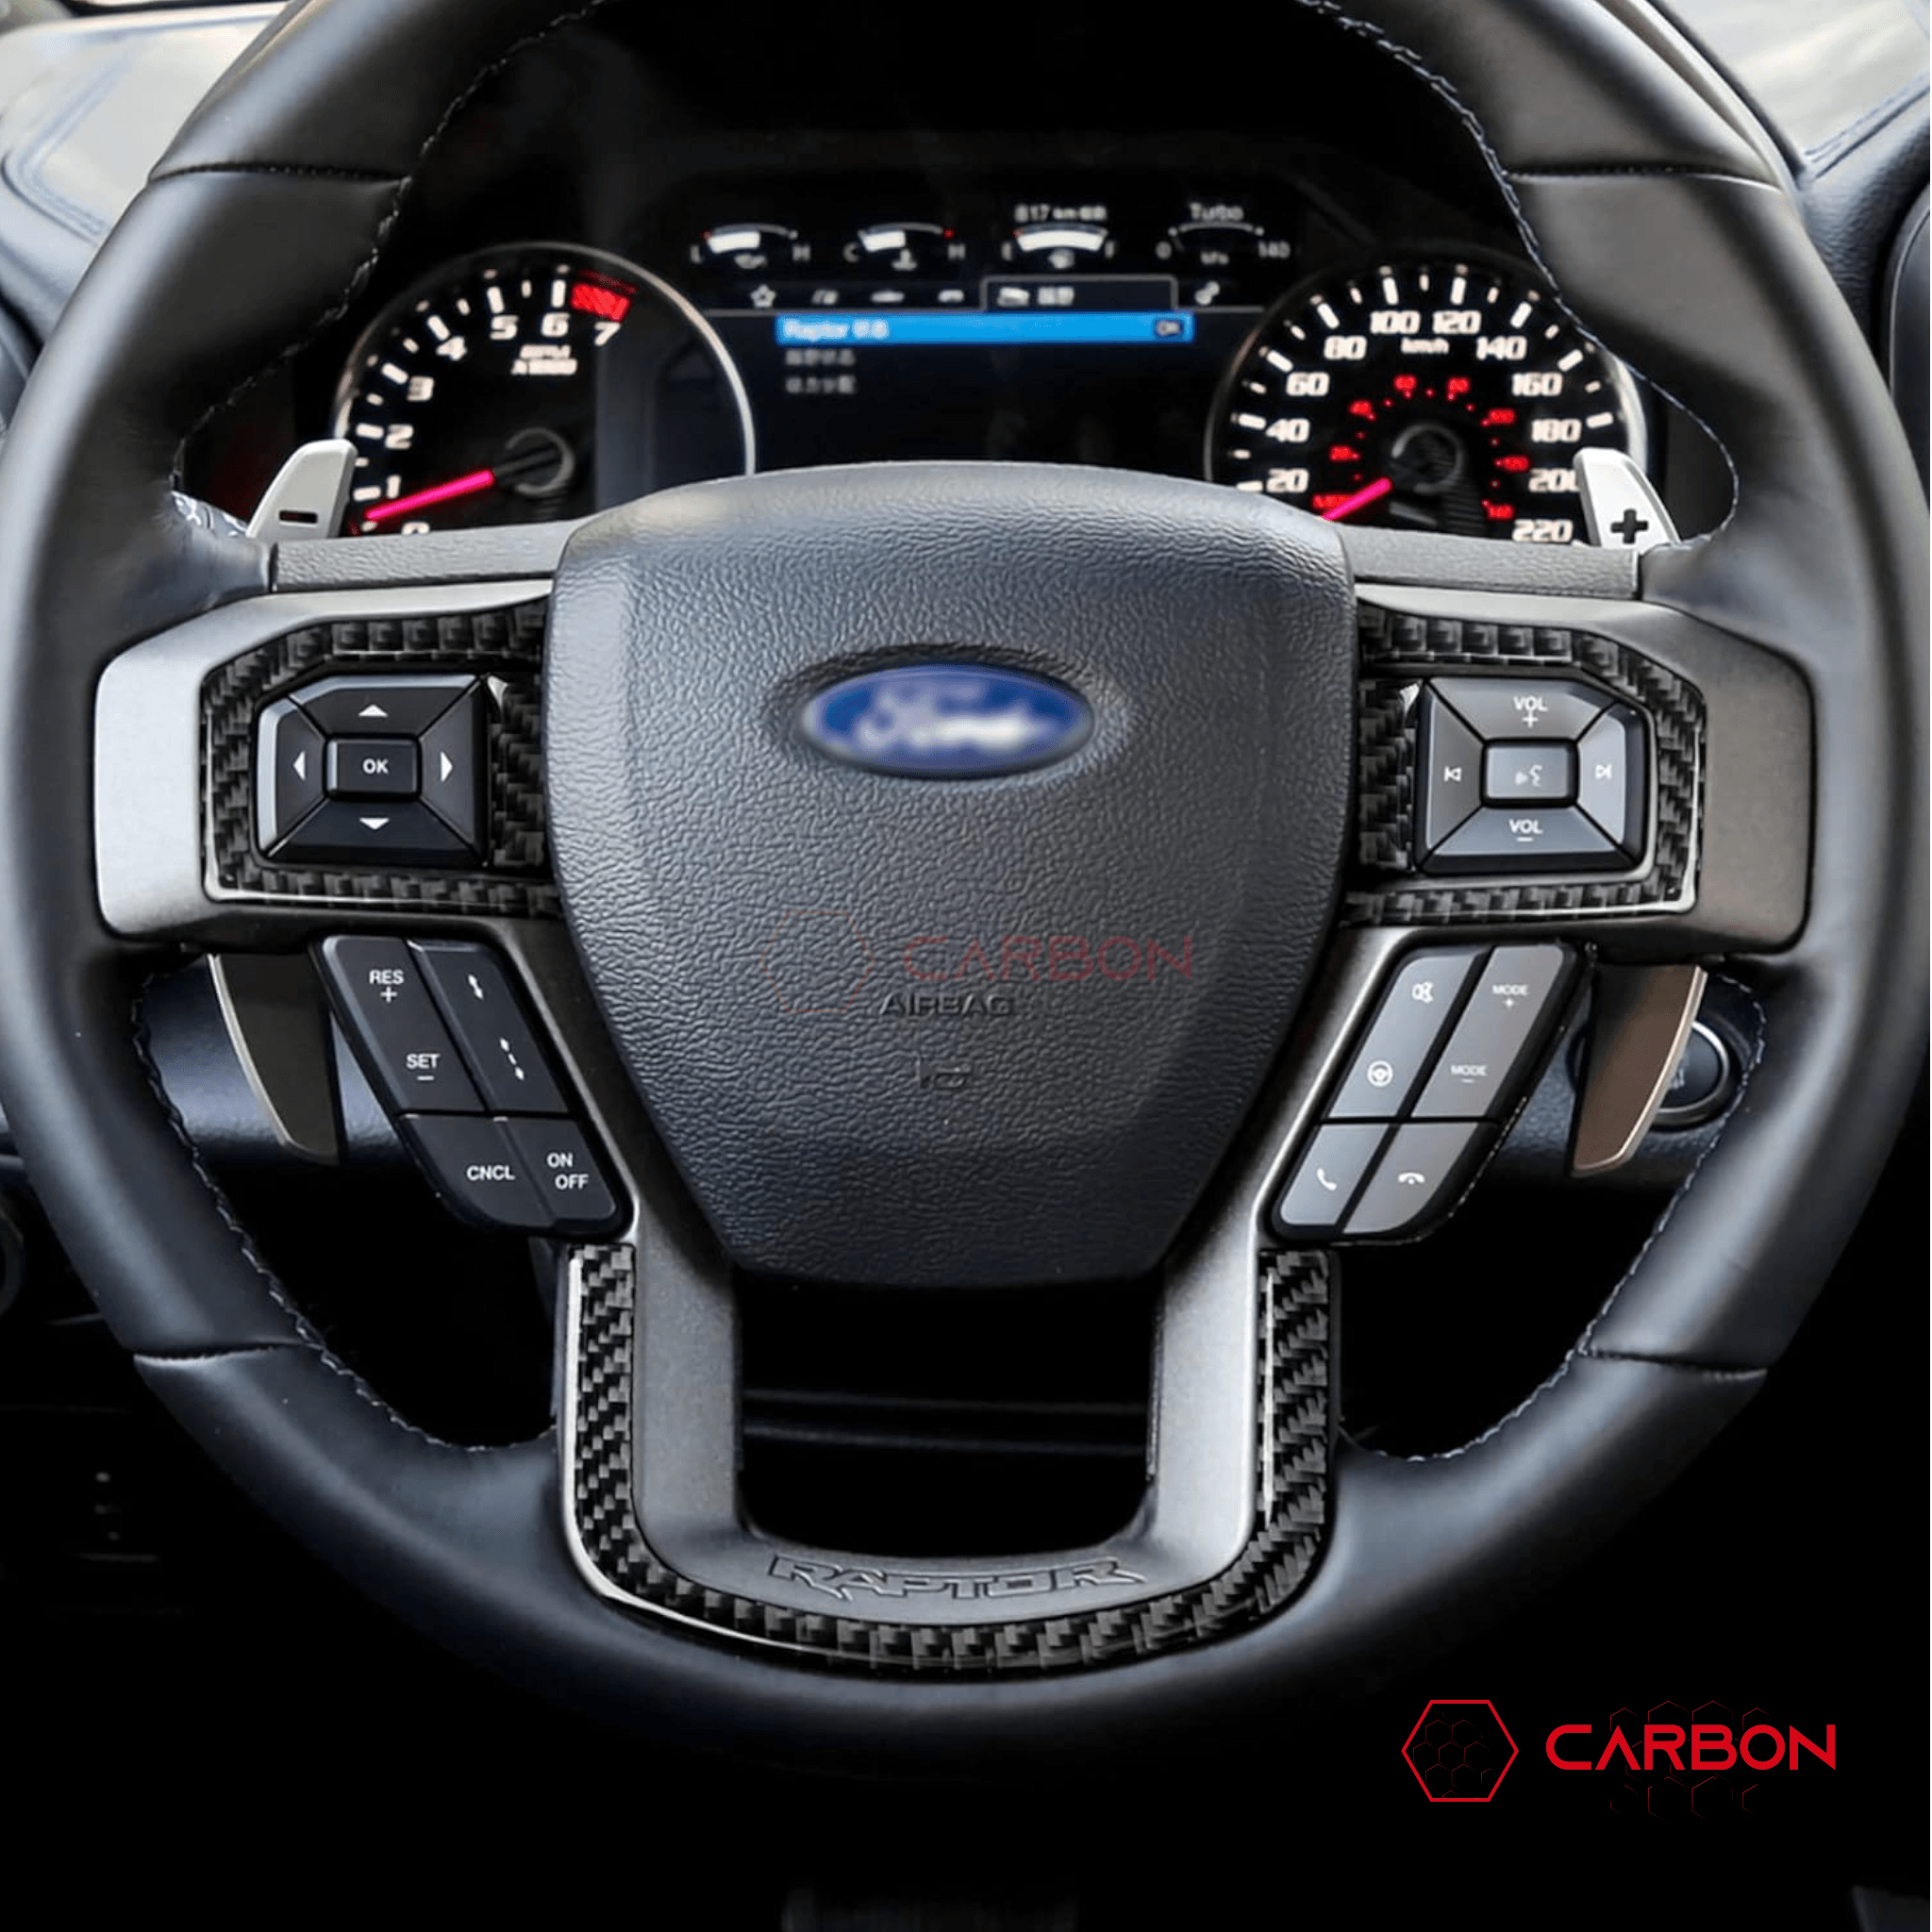 [5pcs] Real Carbon Fiber Steering Wheel Trim Overlay | 2015-2020 Ford F150 - carbonaddons Carbon Fiber Parts, Accessories, Upgrades, Mods